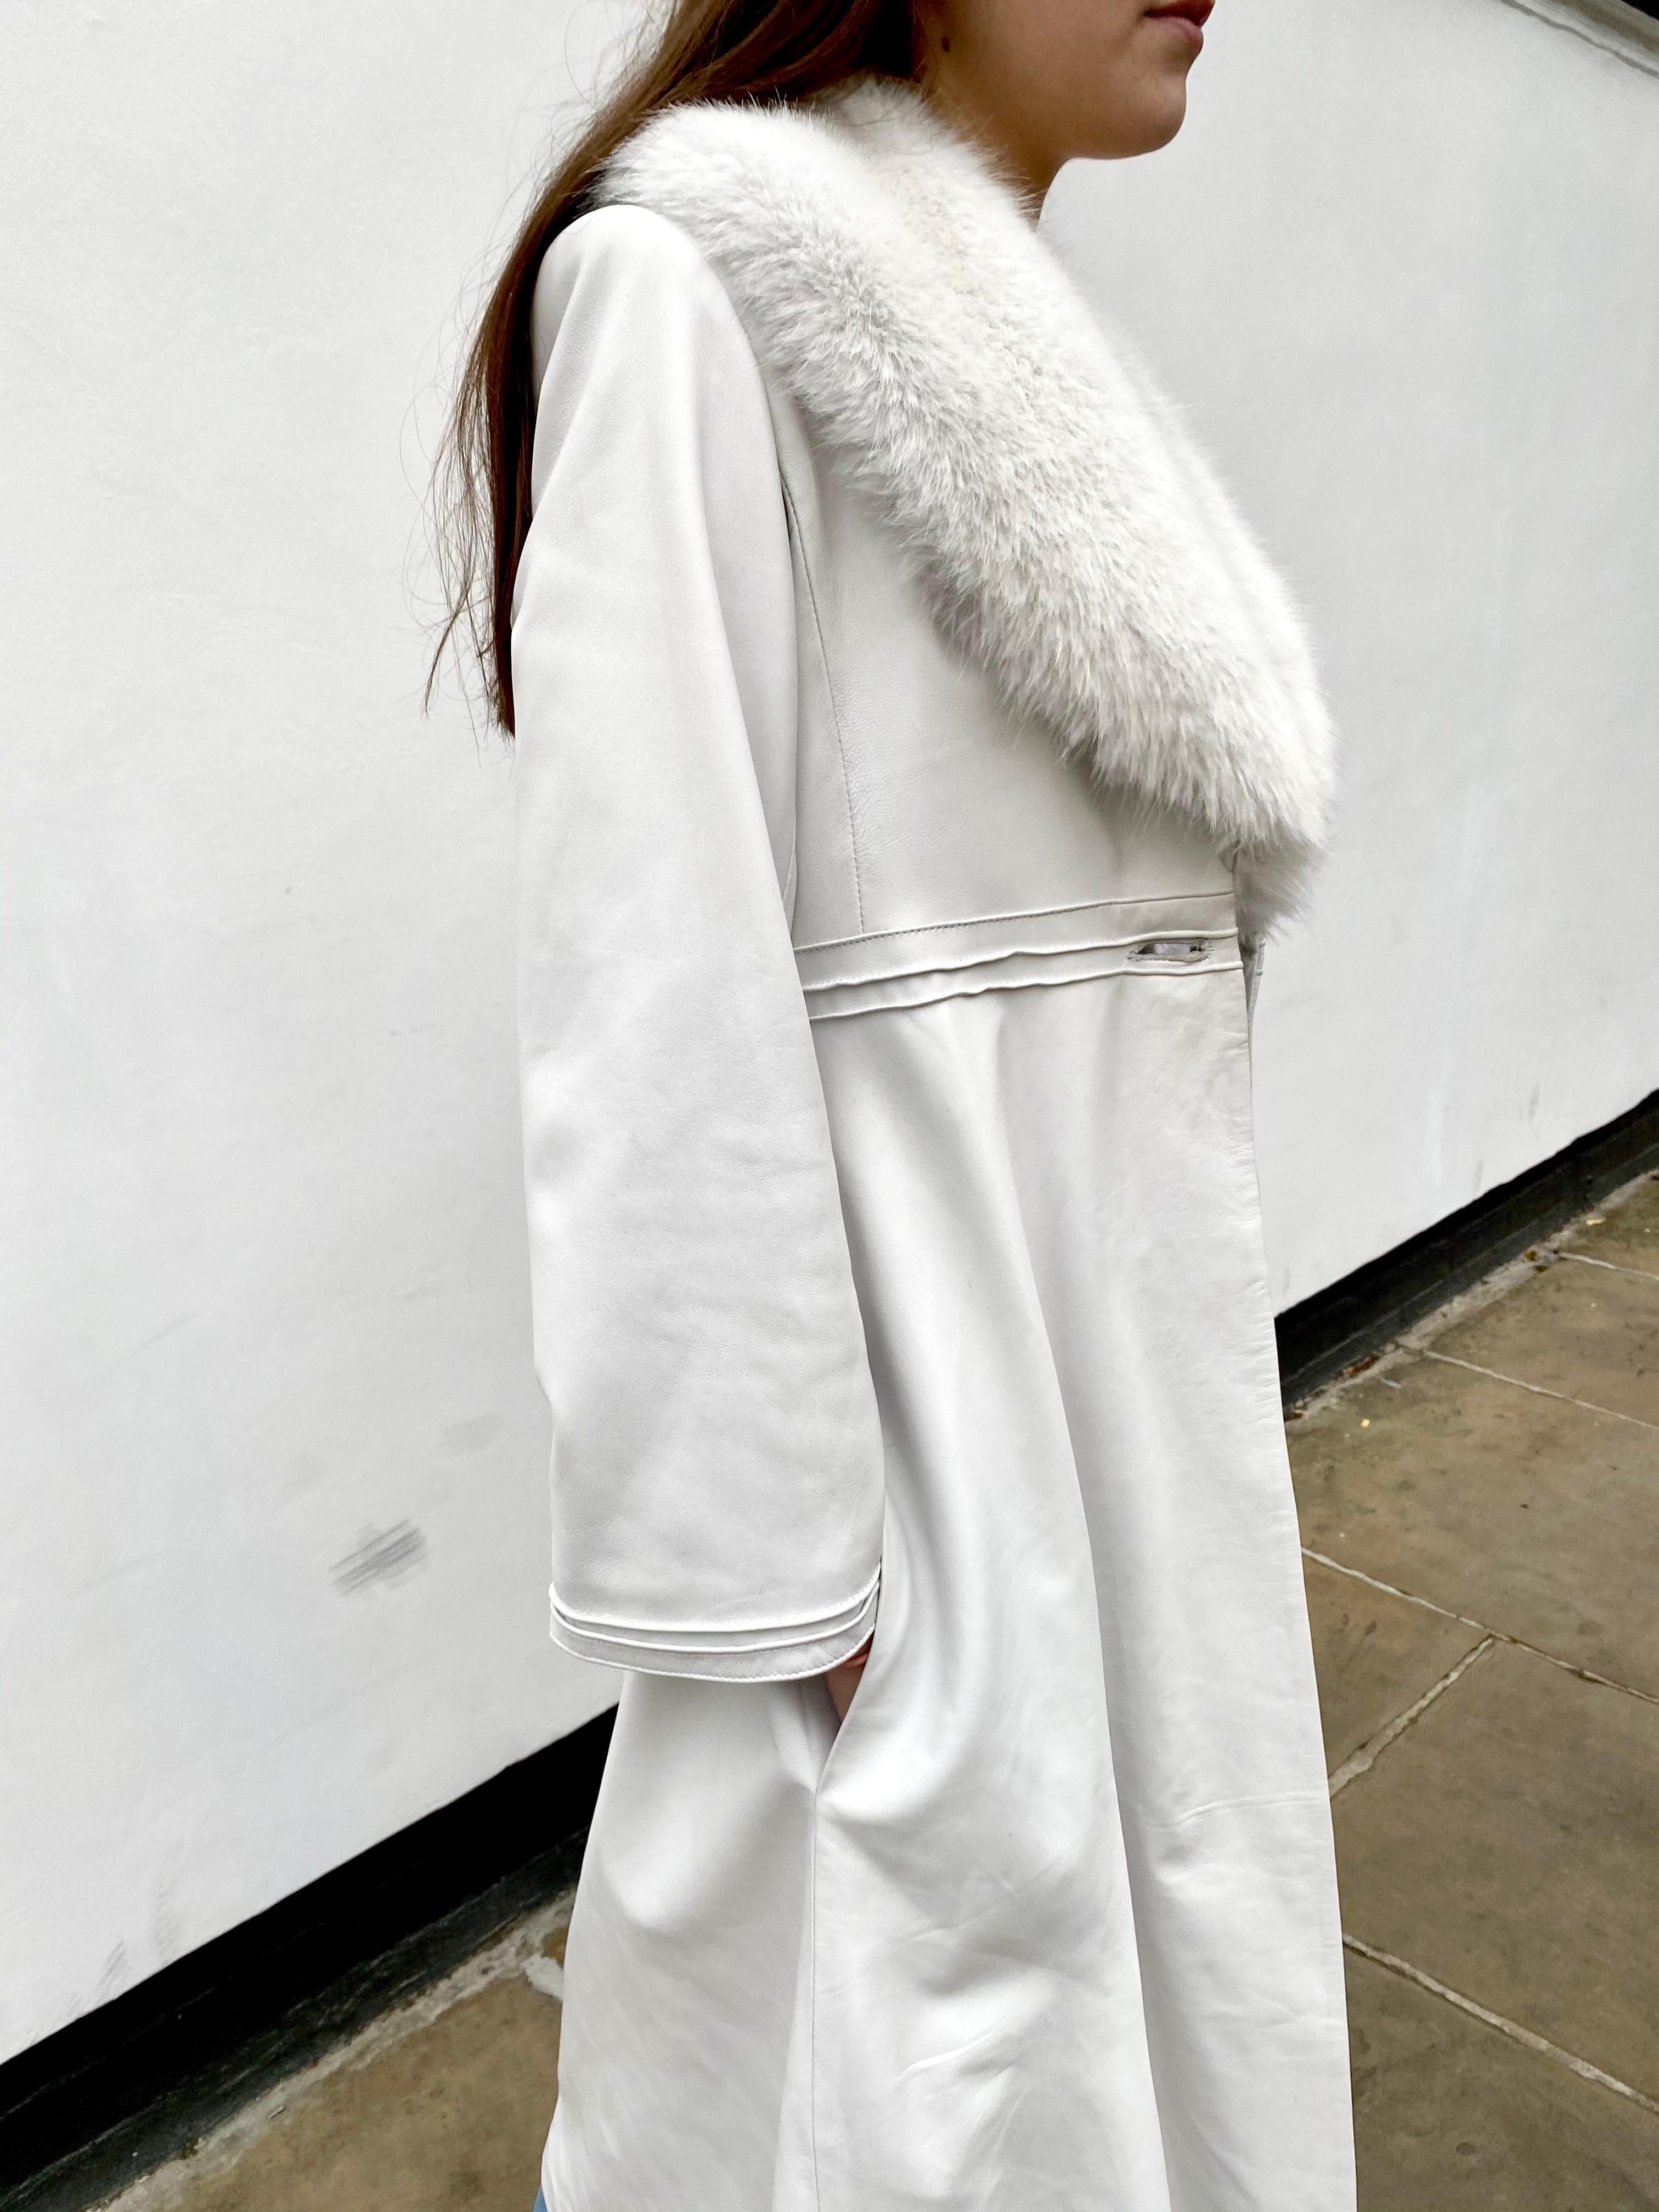 Verheyen London Edward Leather Coat in White with Faux Fur - Size uk 14  For Sale 6